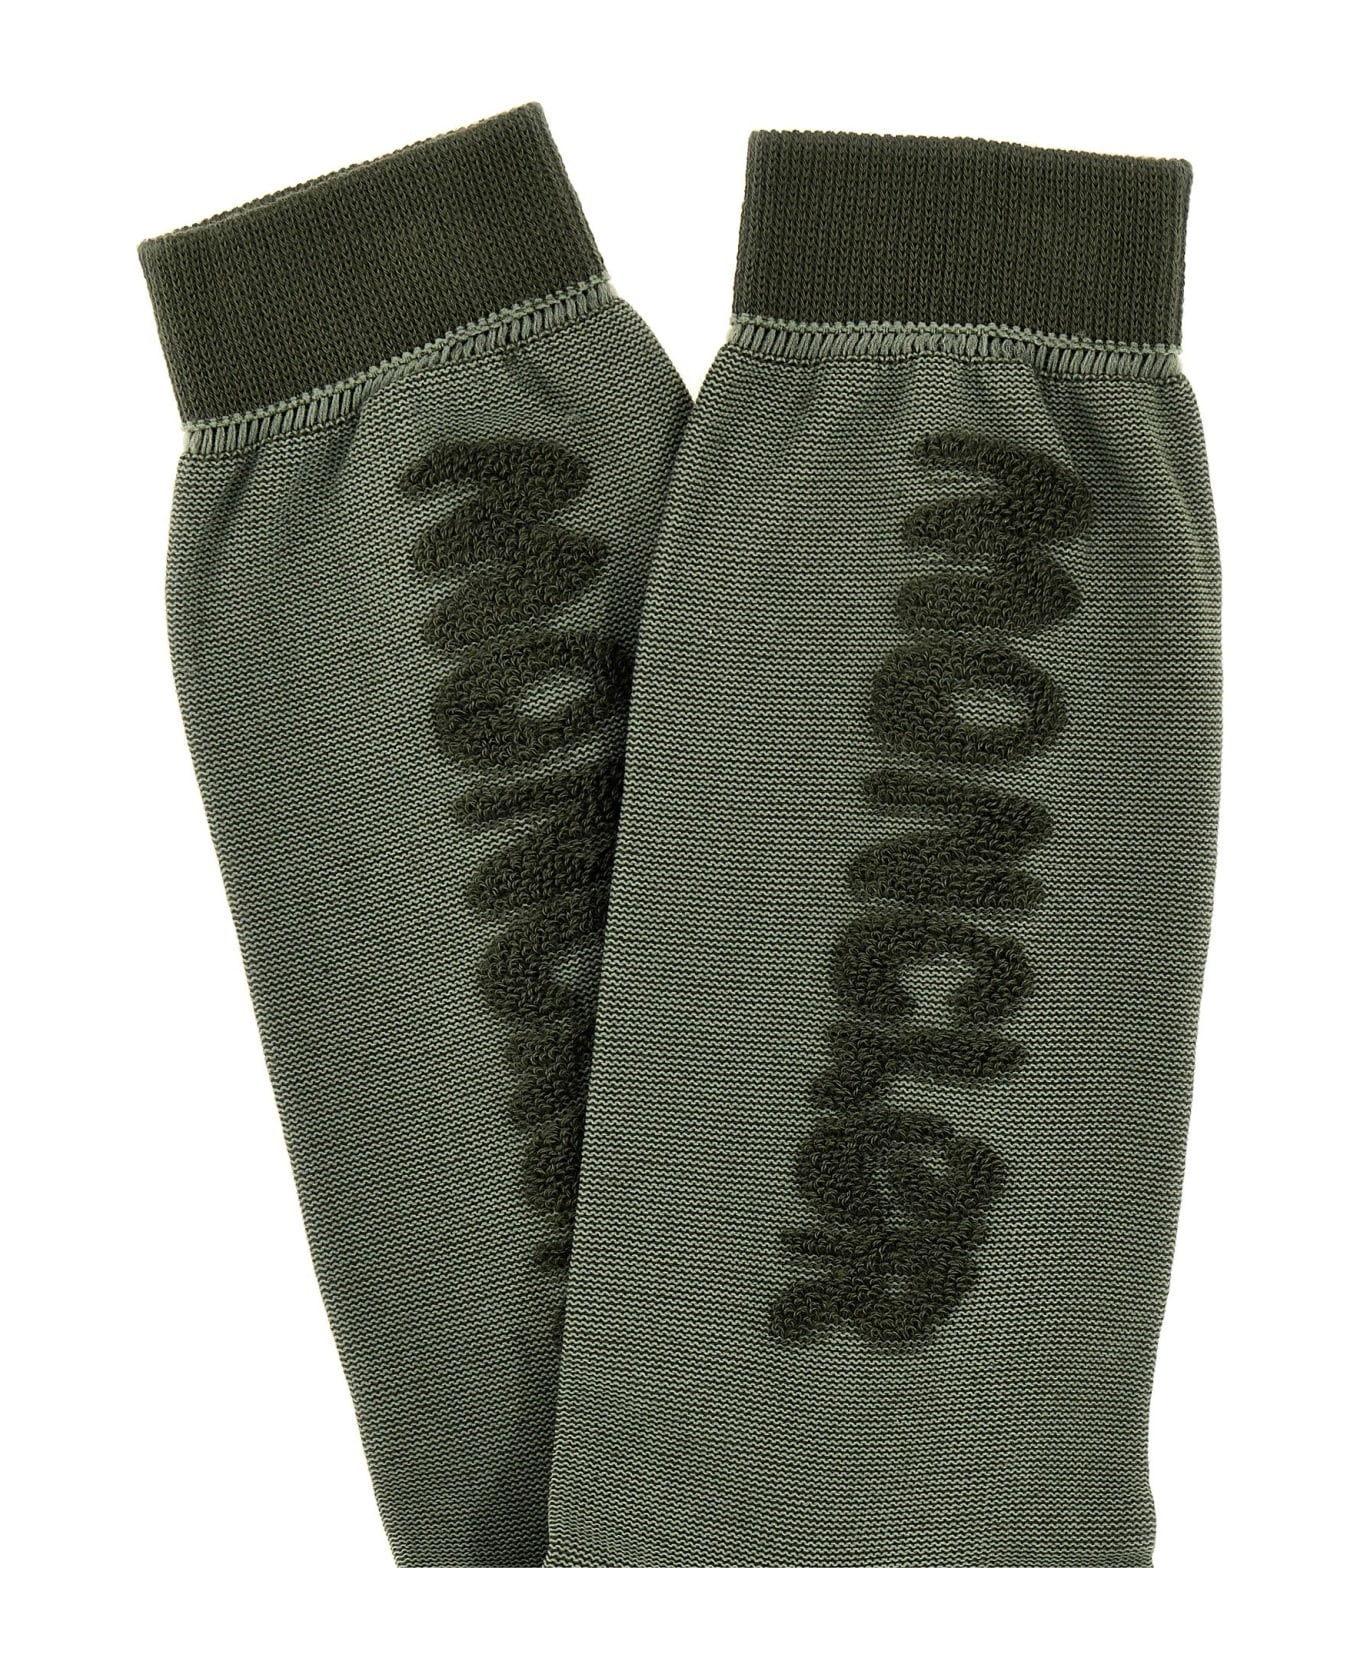 Moncler Genius X Salehe Bembury Socks - 3